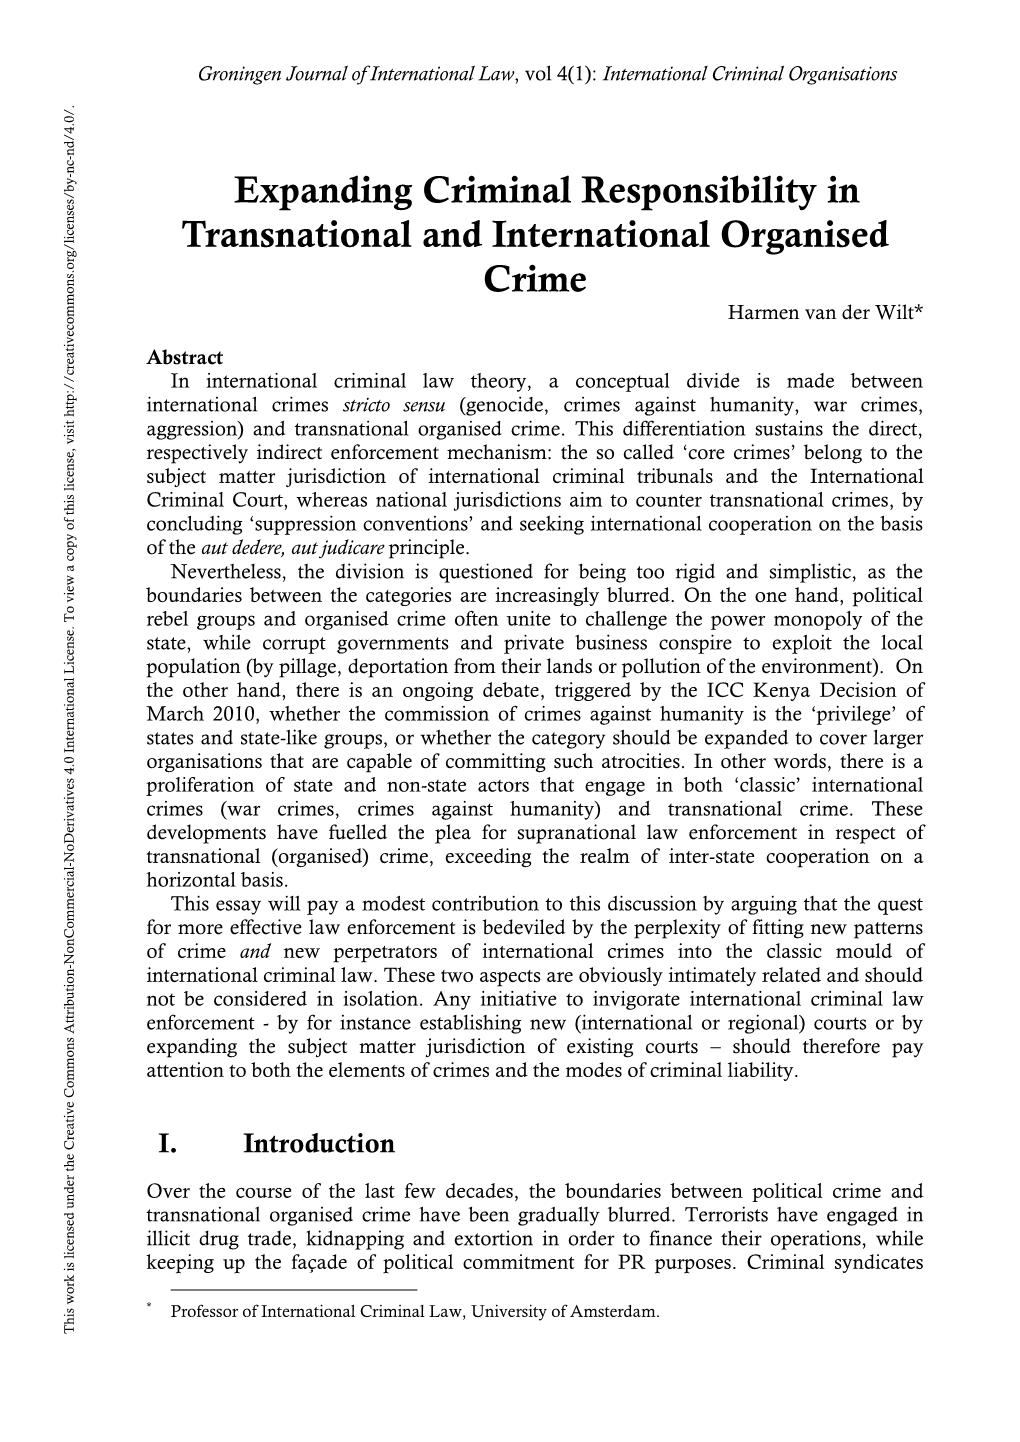 Expanding Criminal Responsibility in Transnational and International Organised Crime Harmen Van Der Wilt*